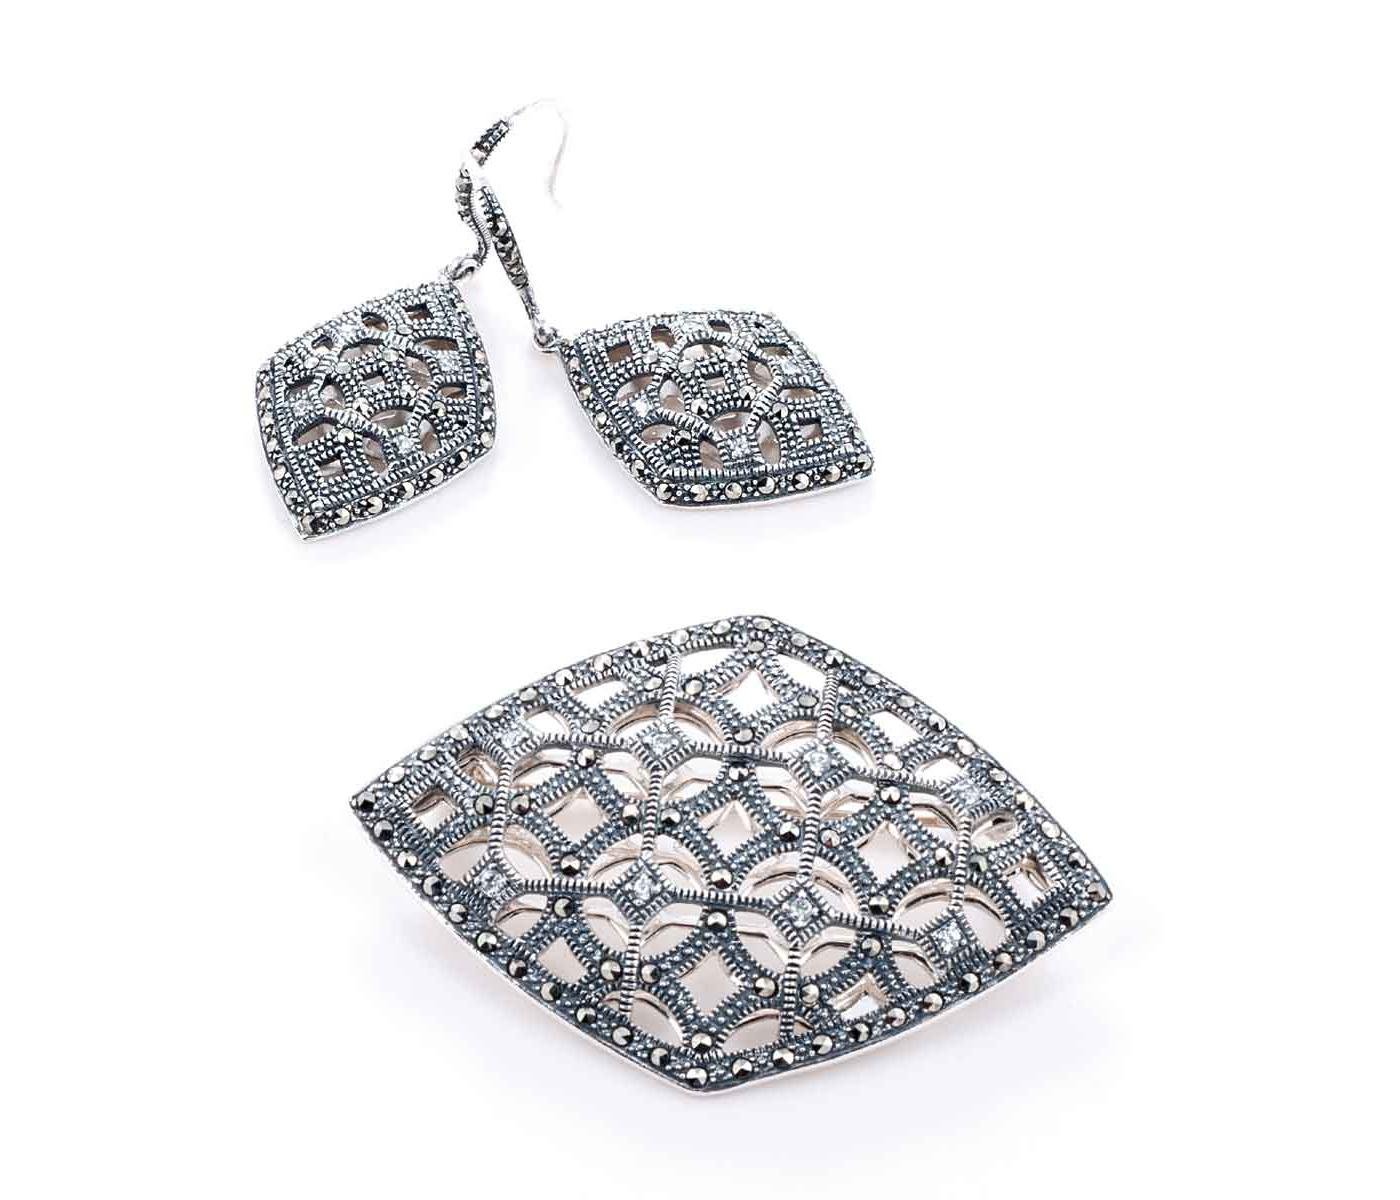 Earrings by MARC™ for Swarovski Gems